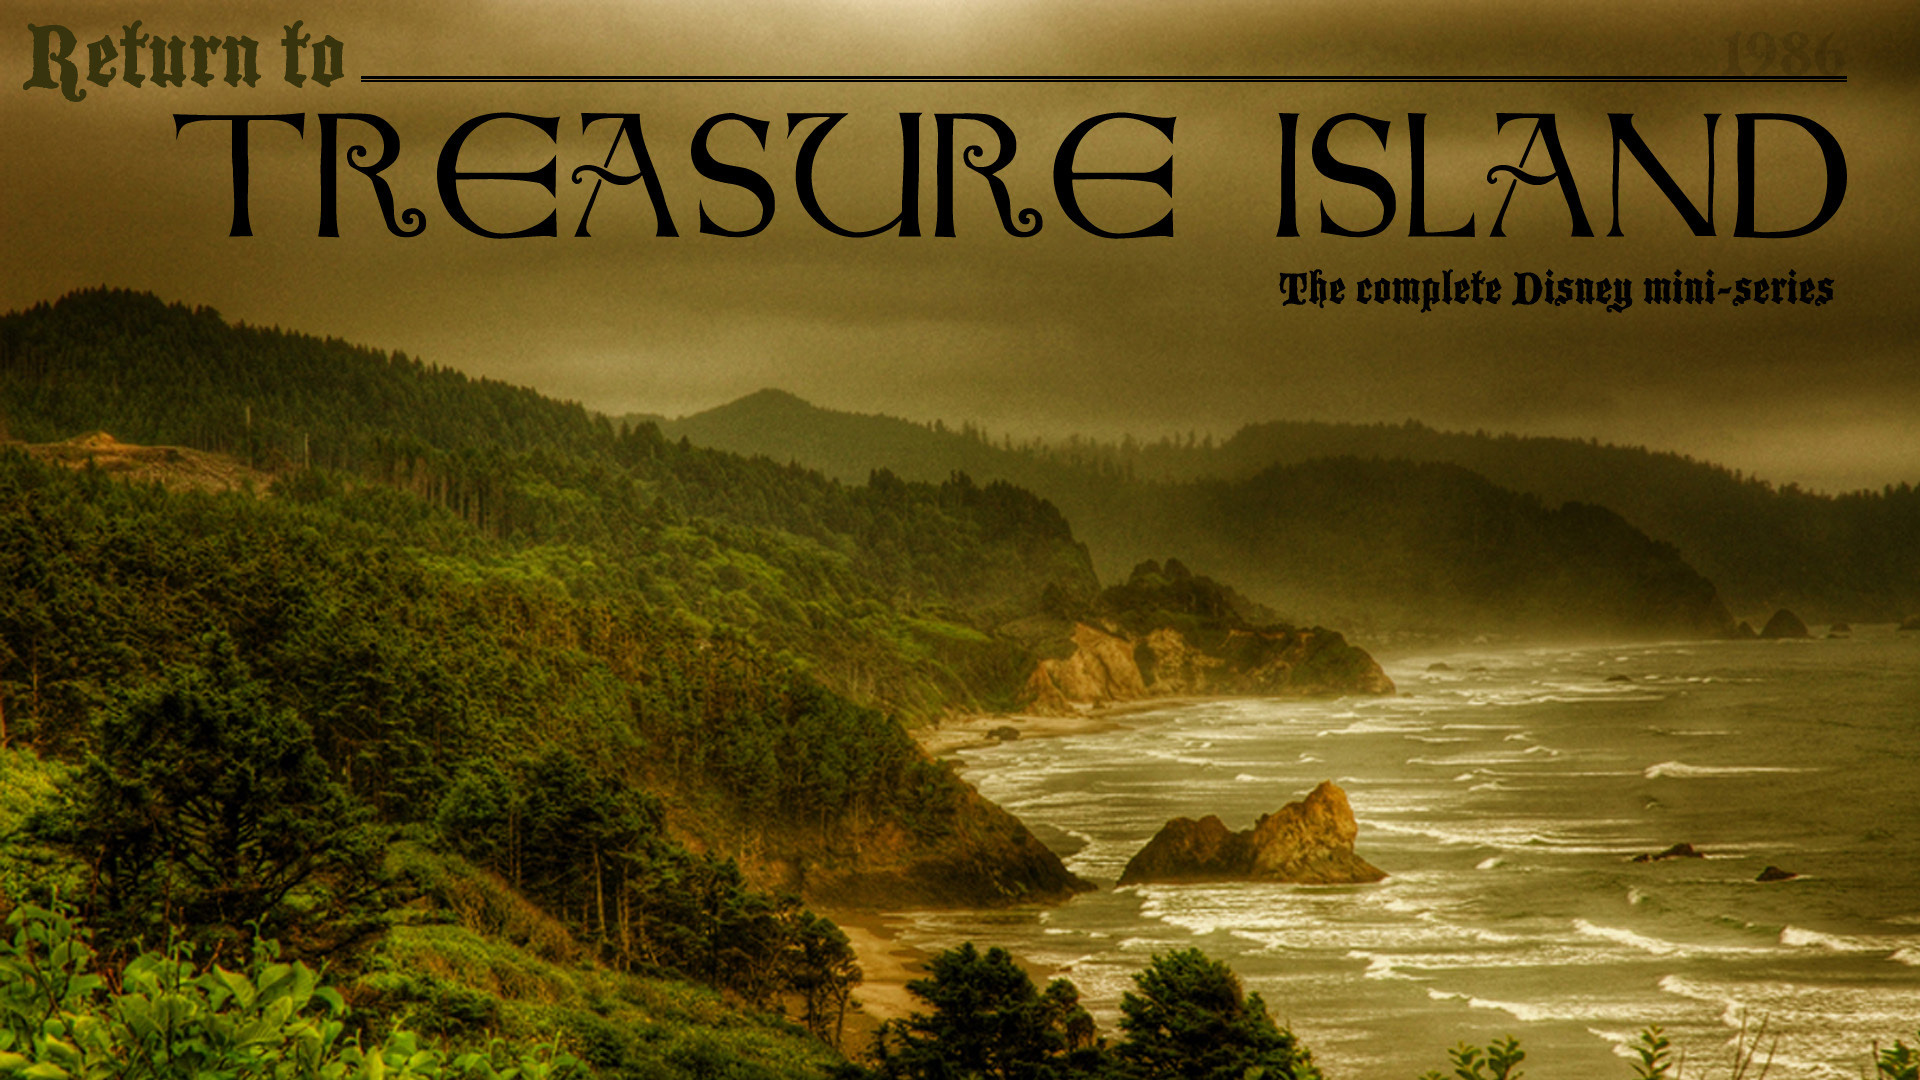 Show Return to Treasure Island